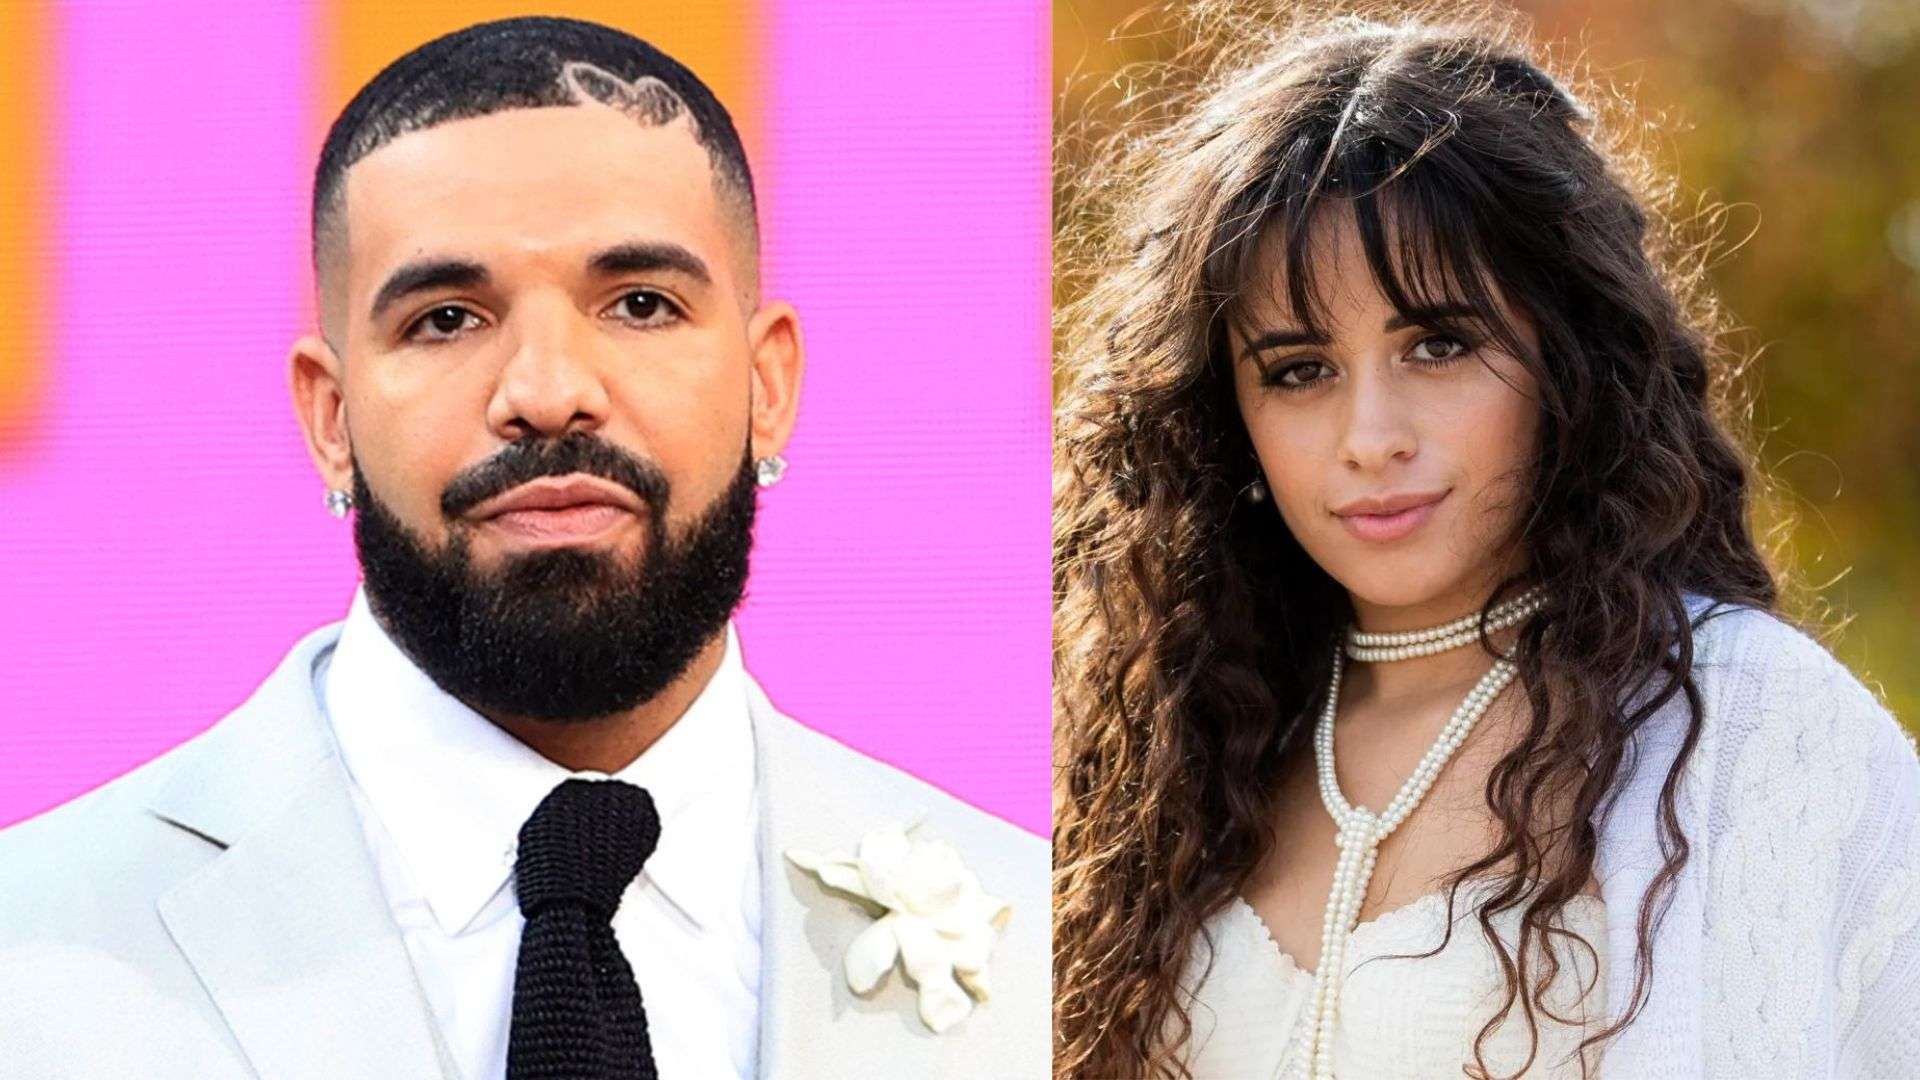 Drake And Camila Cabello Dating Rumors quickinfobuzz